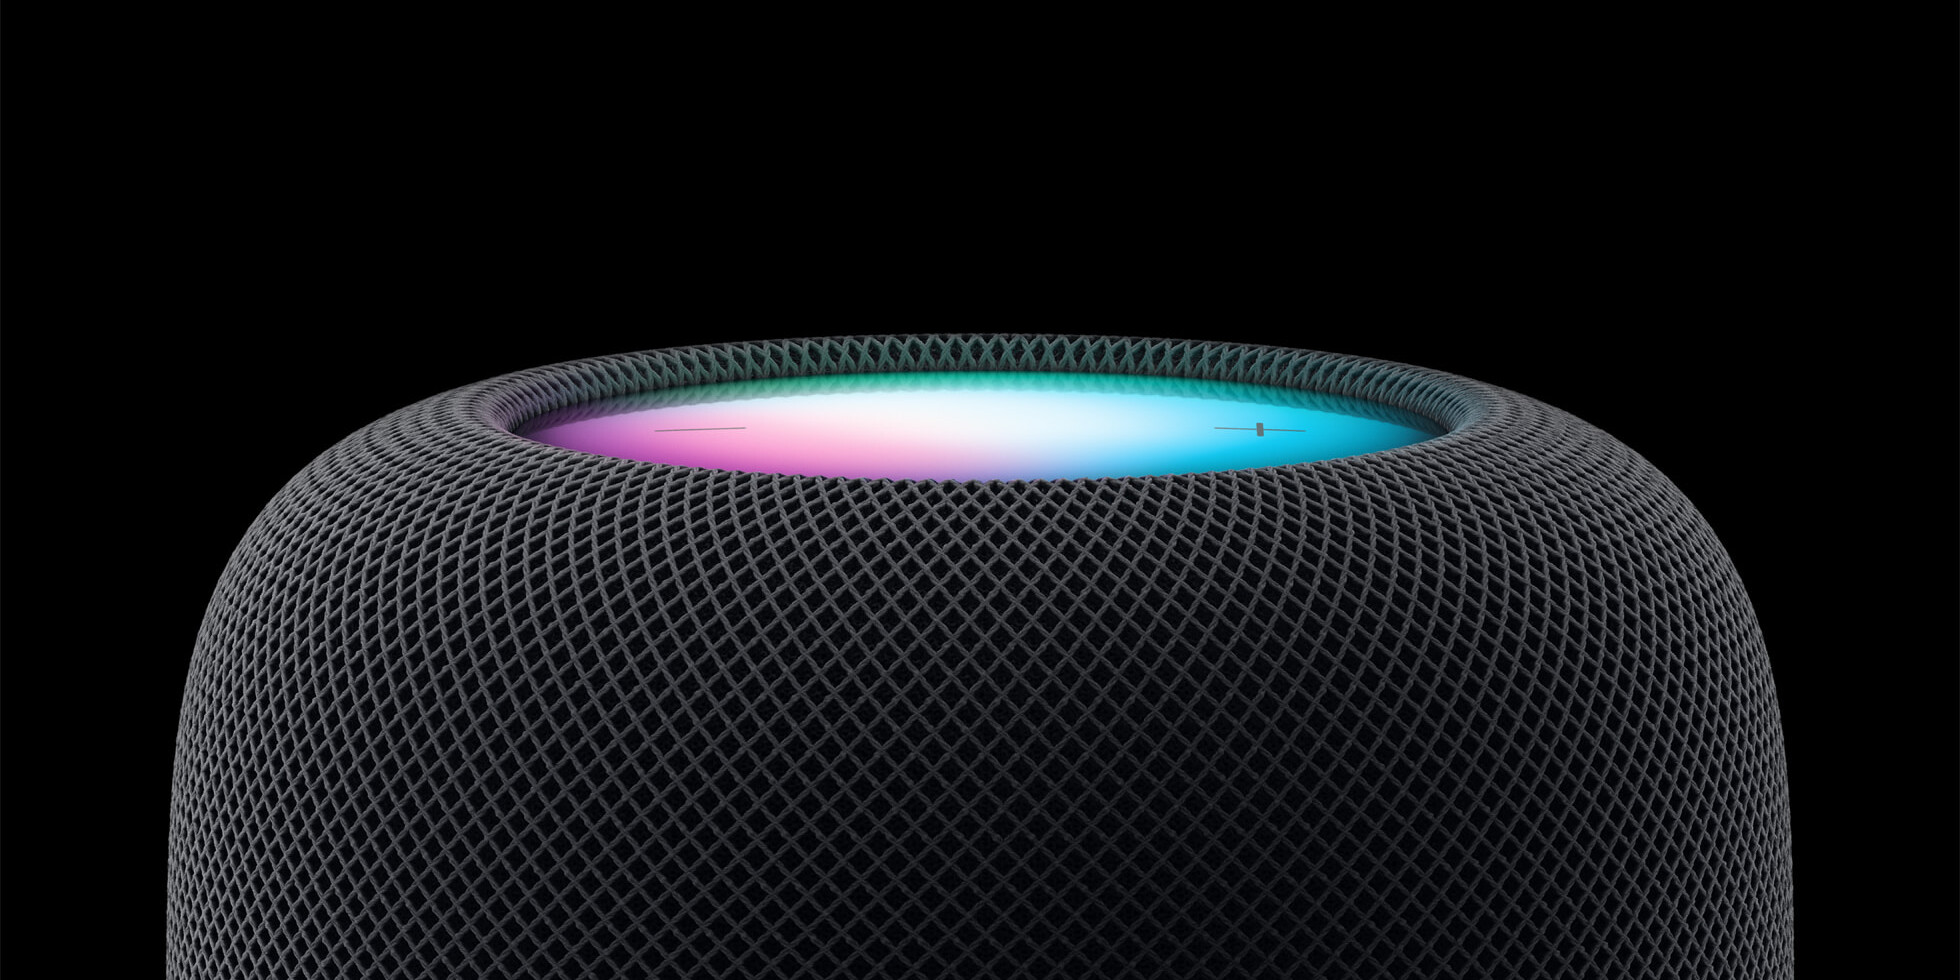 Apple announced a new smart home speaker